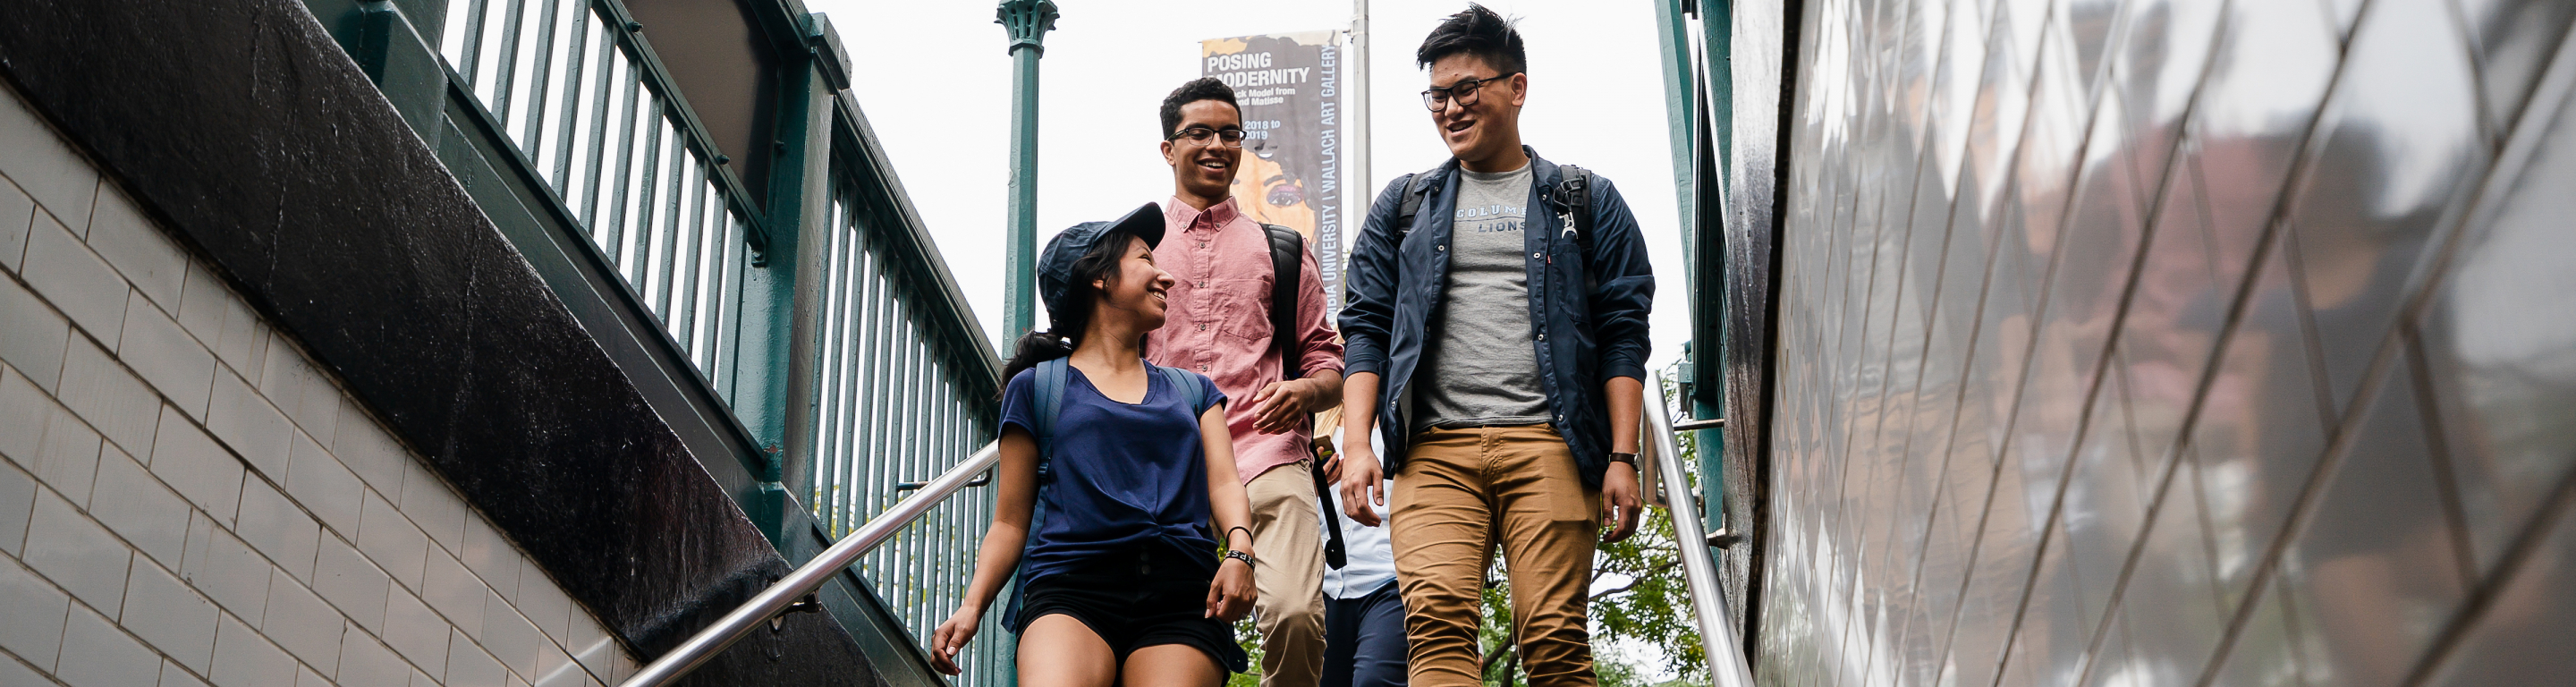 Three students walk down into the NYC suwbay